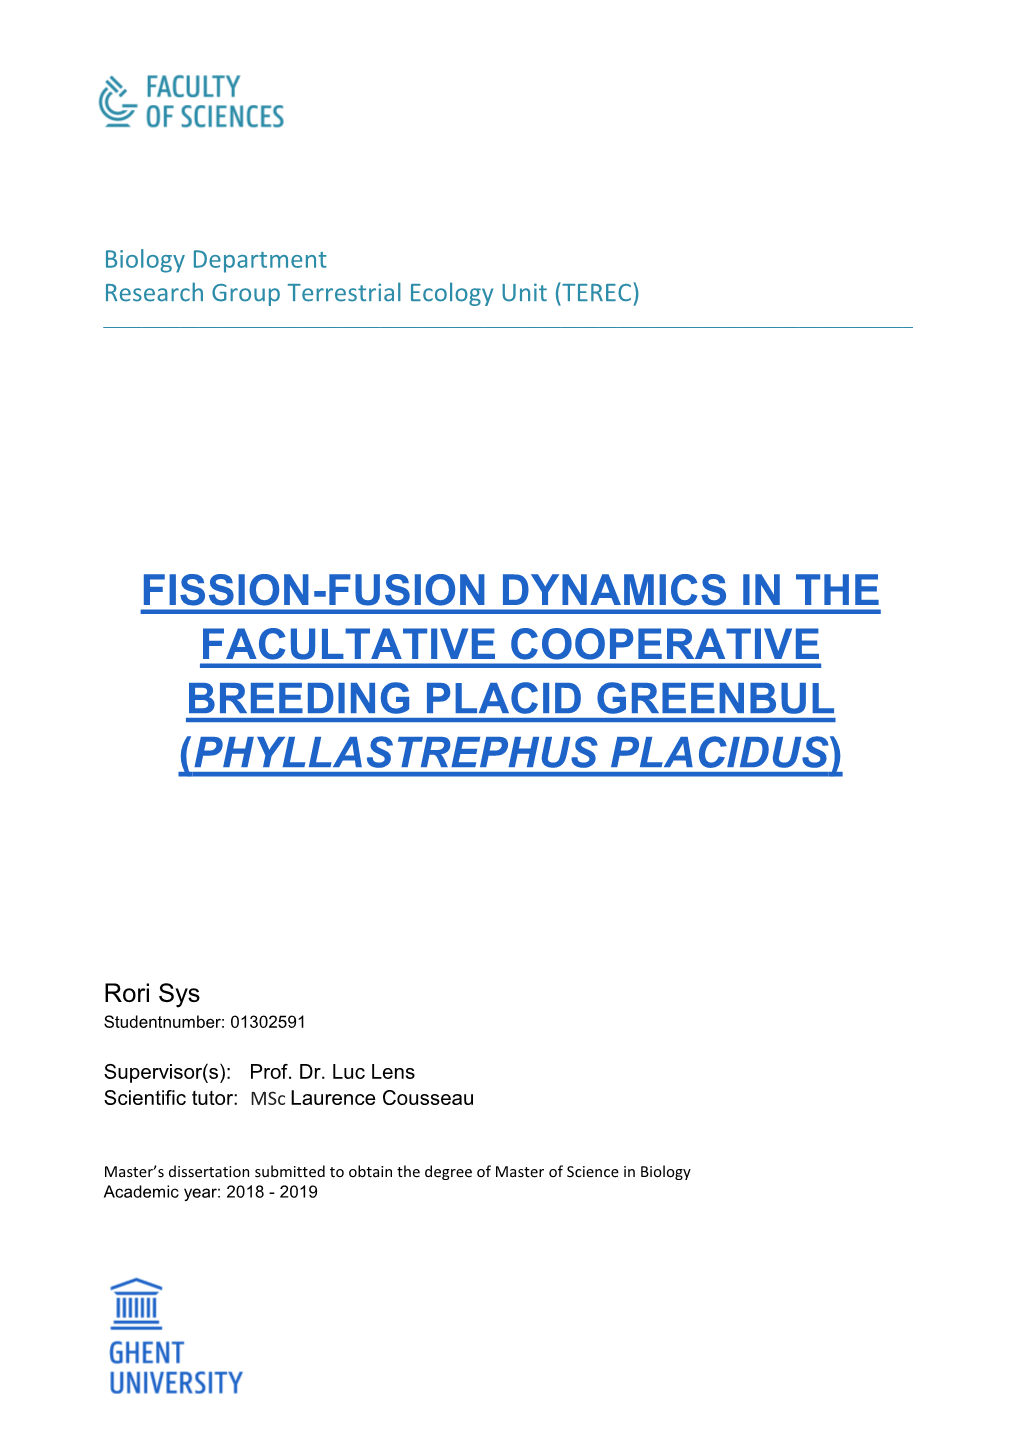 Fission-Fusion Dynamics in the Facultative Cooperative Breeding Placid Greenbul (Phyllastrephus Placidus)